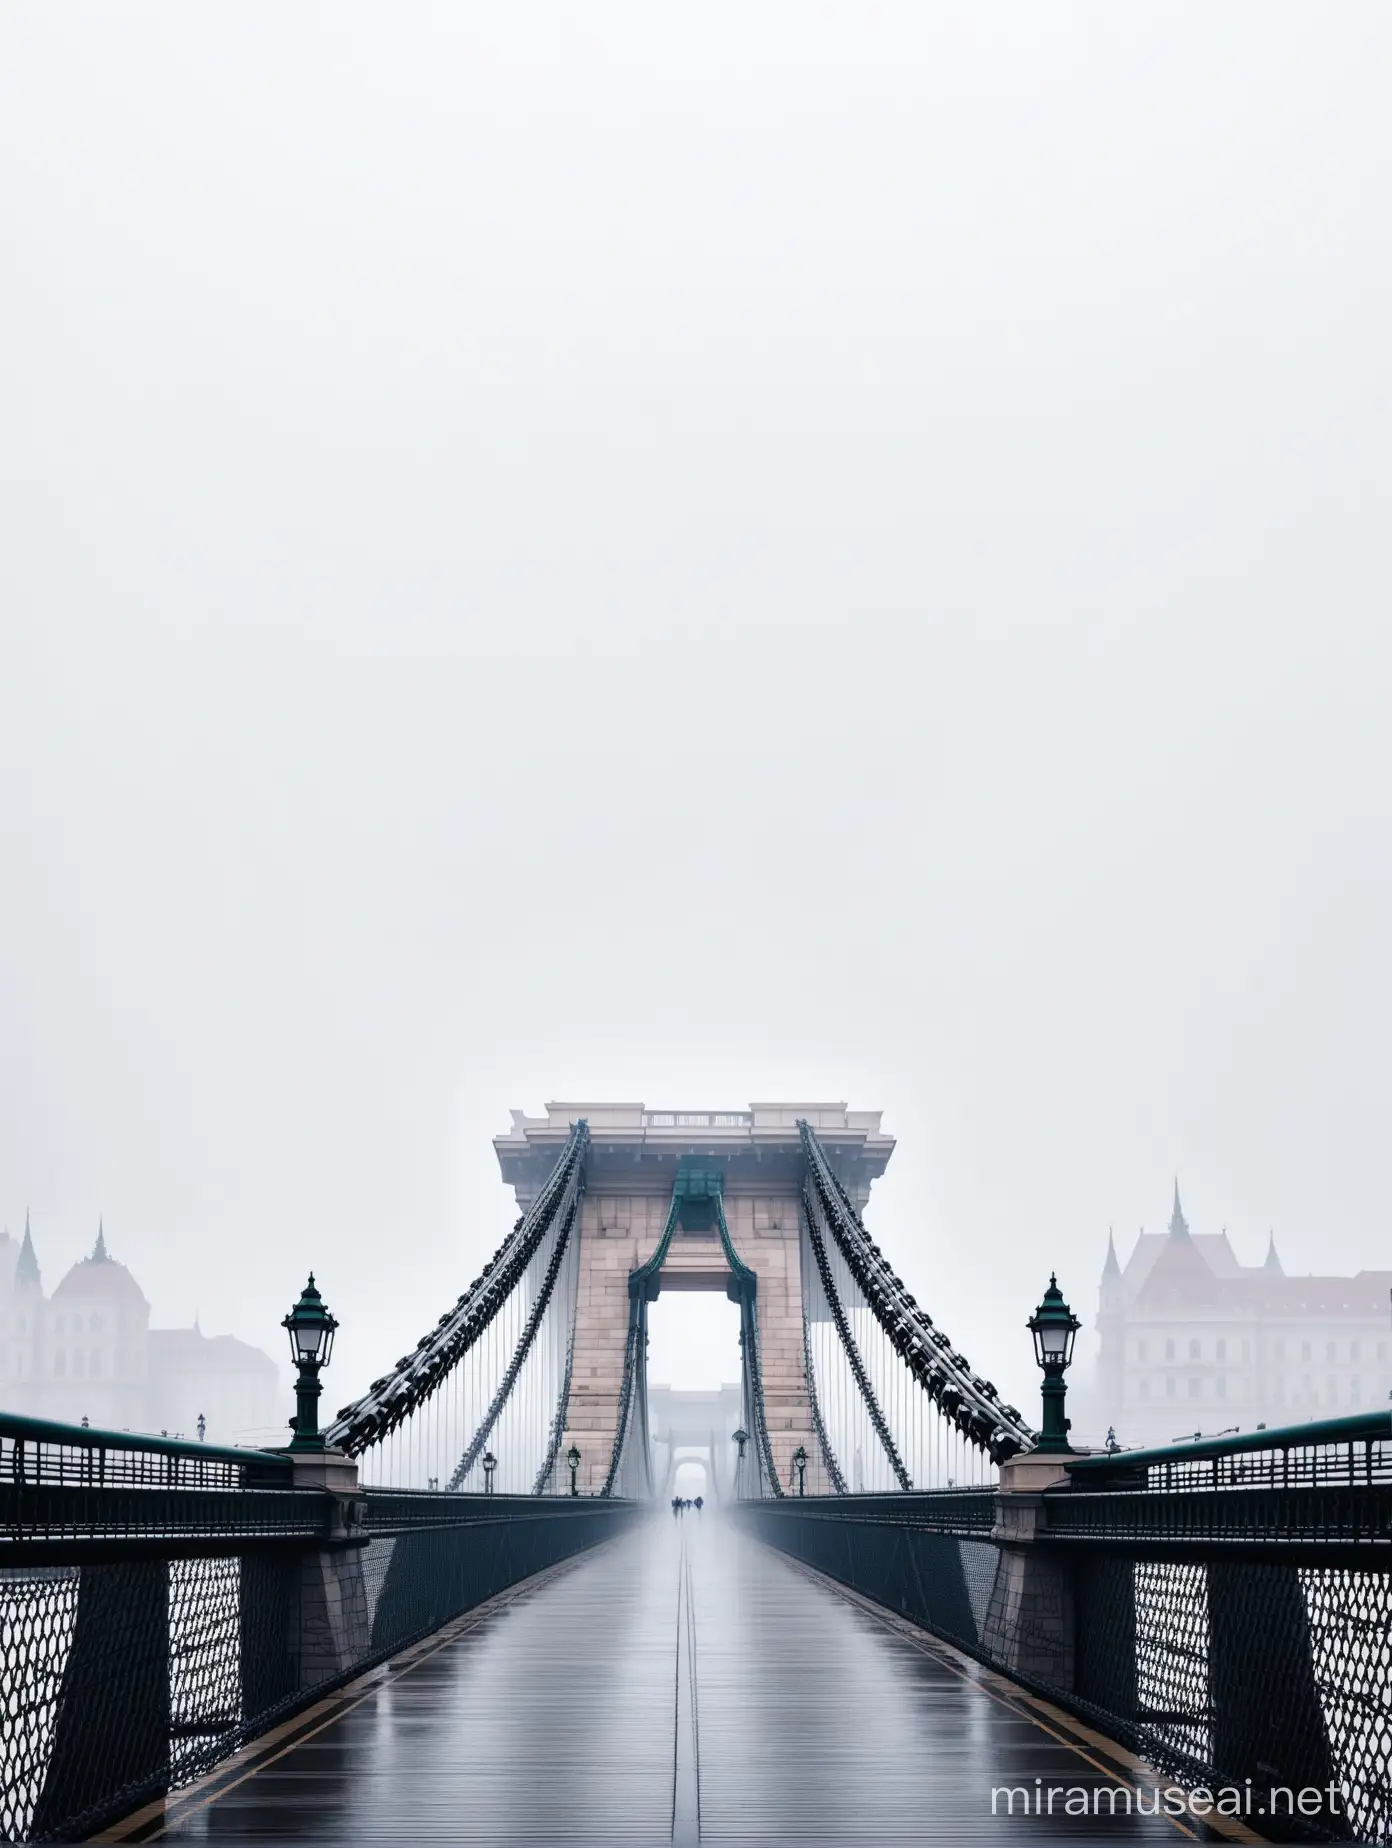 CHAIN BRIDGE IN BUDAPEST, FOGG